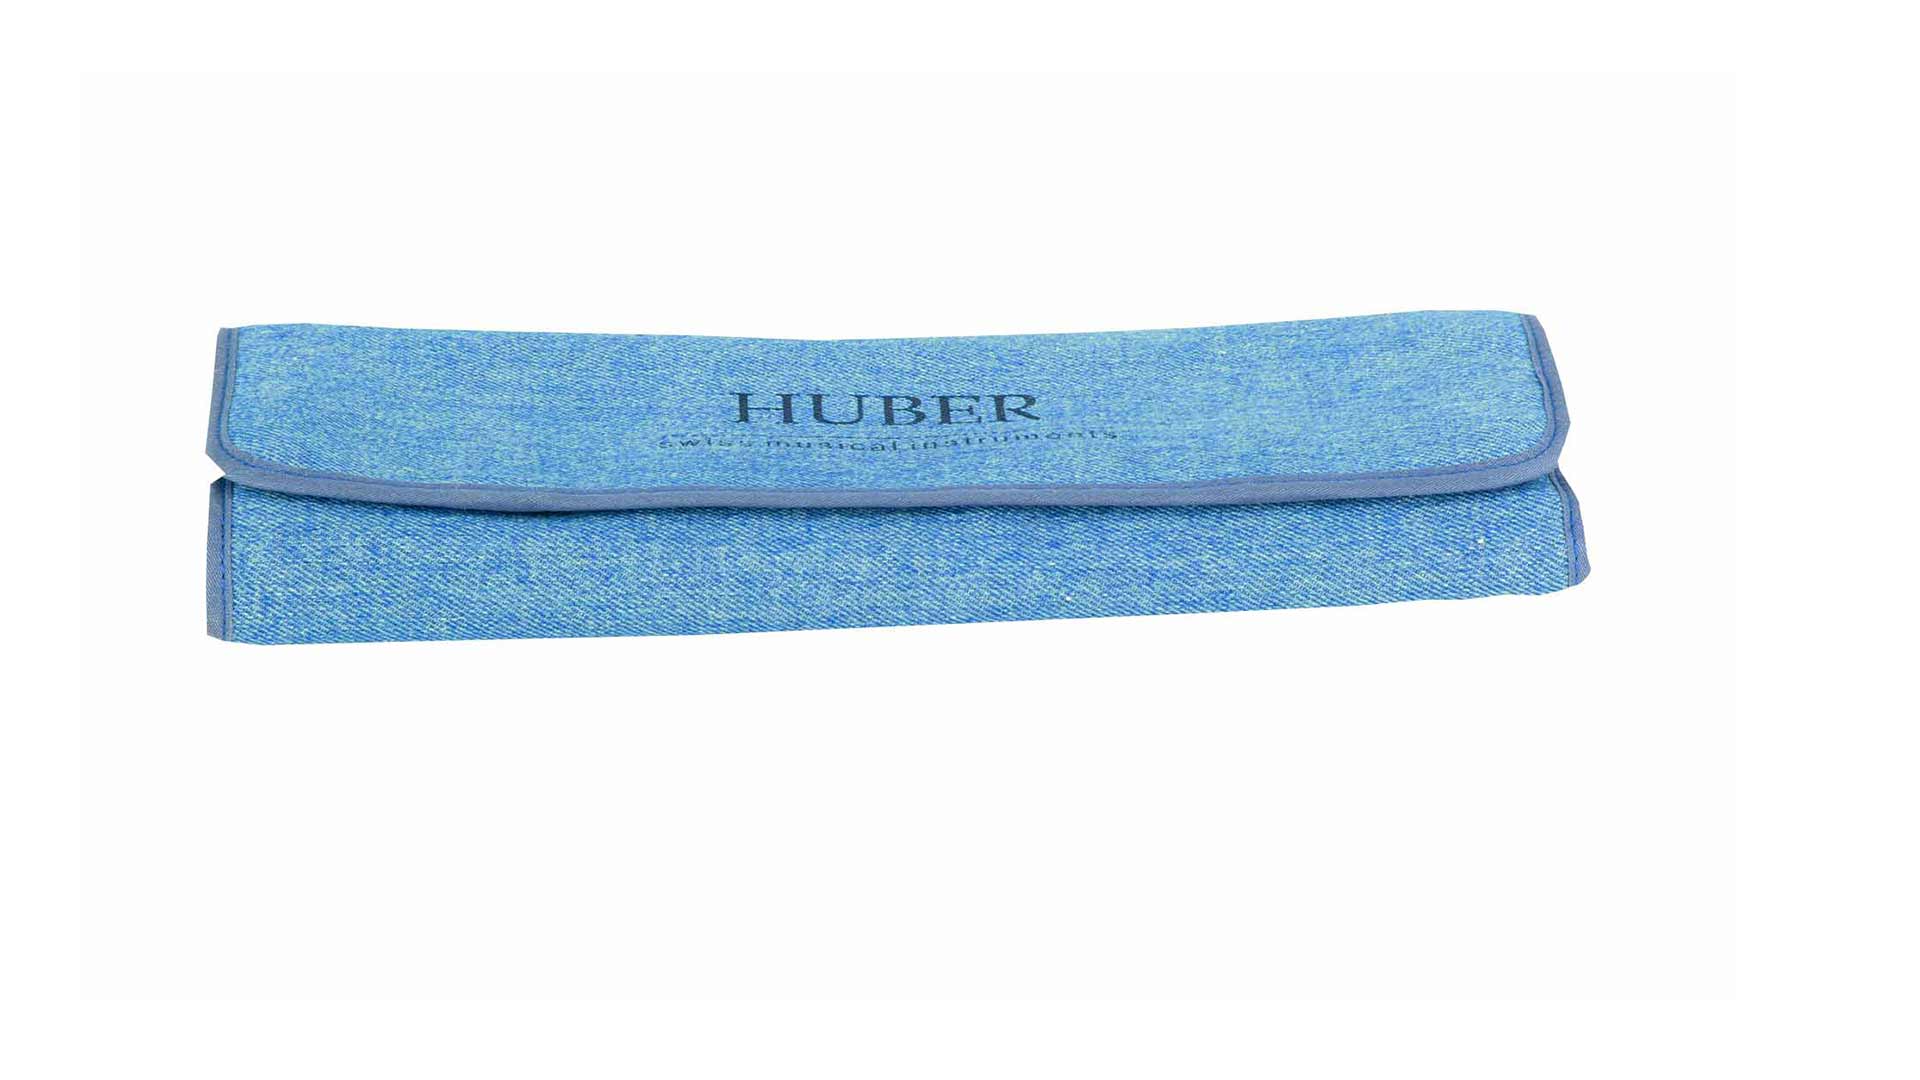 Huber, jeans pocket, alto, blue cotton